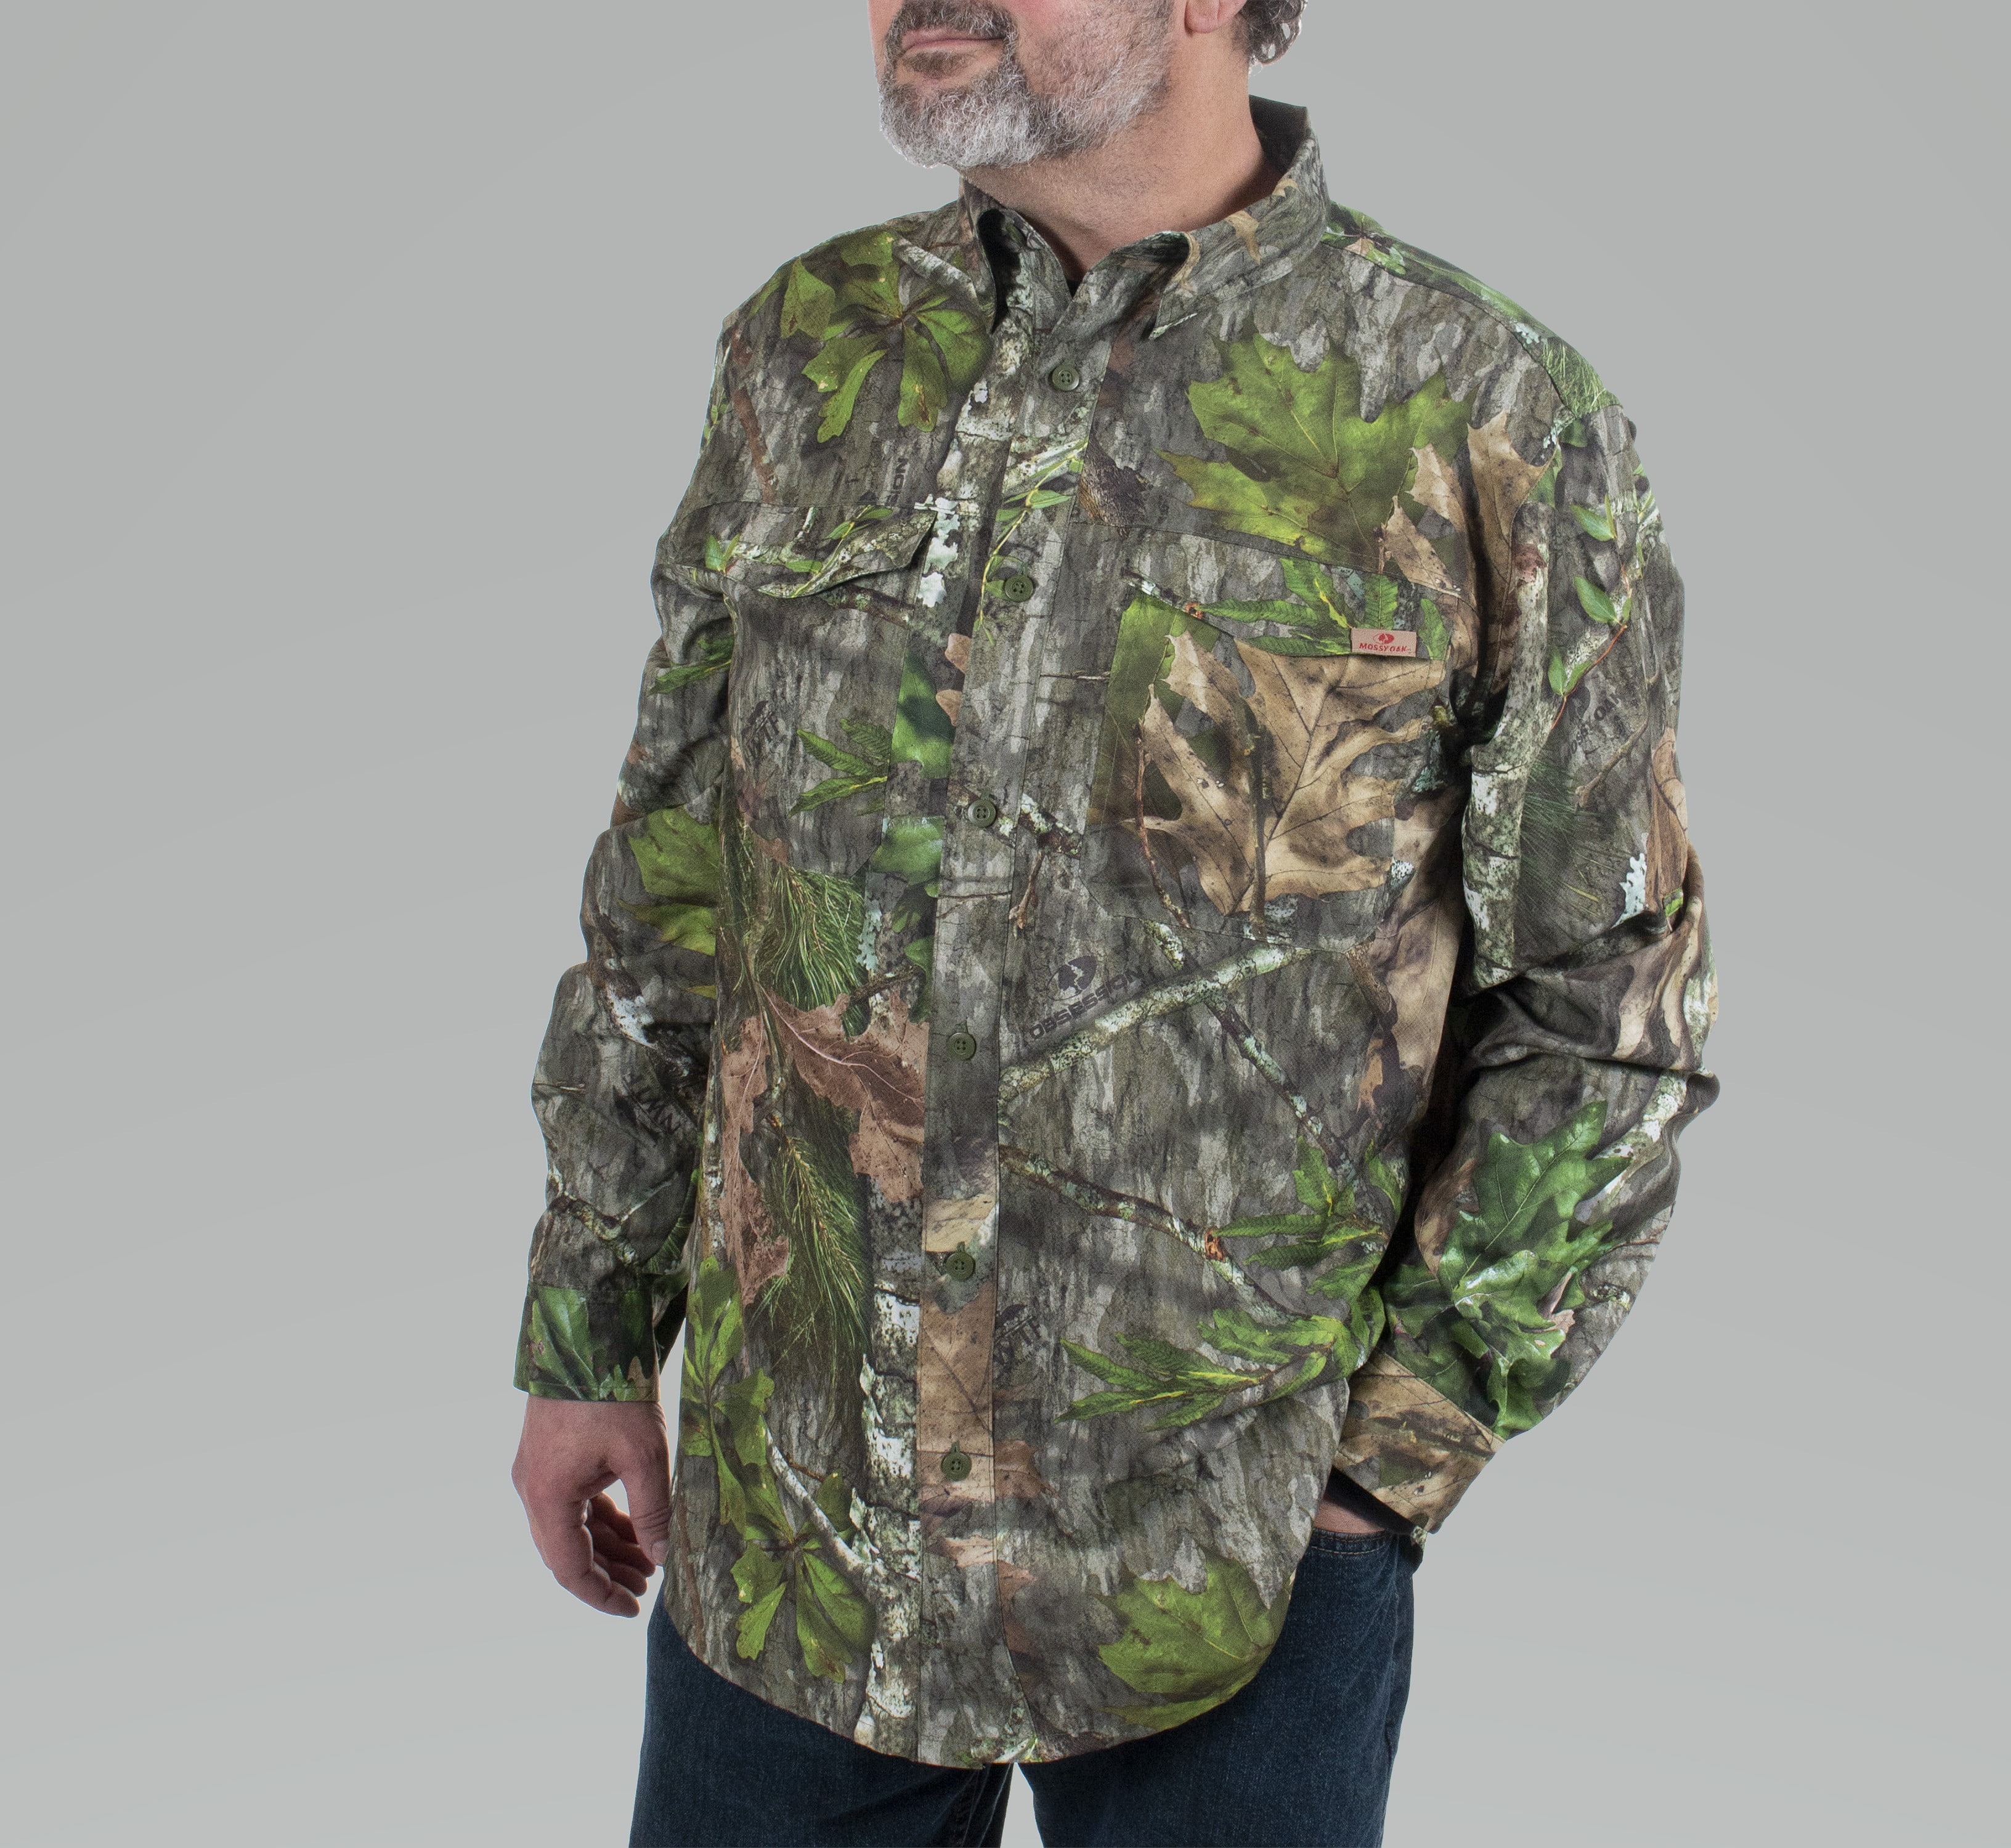 Mossy Oak Men's Long Sleeve Hunting Guide Shirt, Size 3X-Large